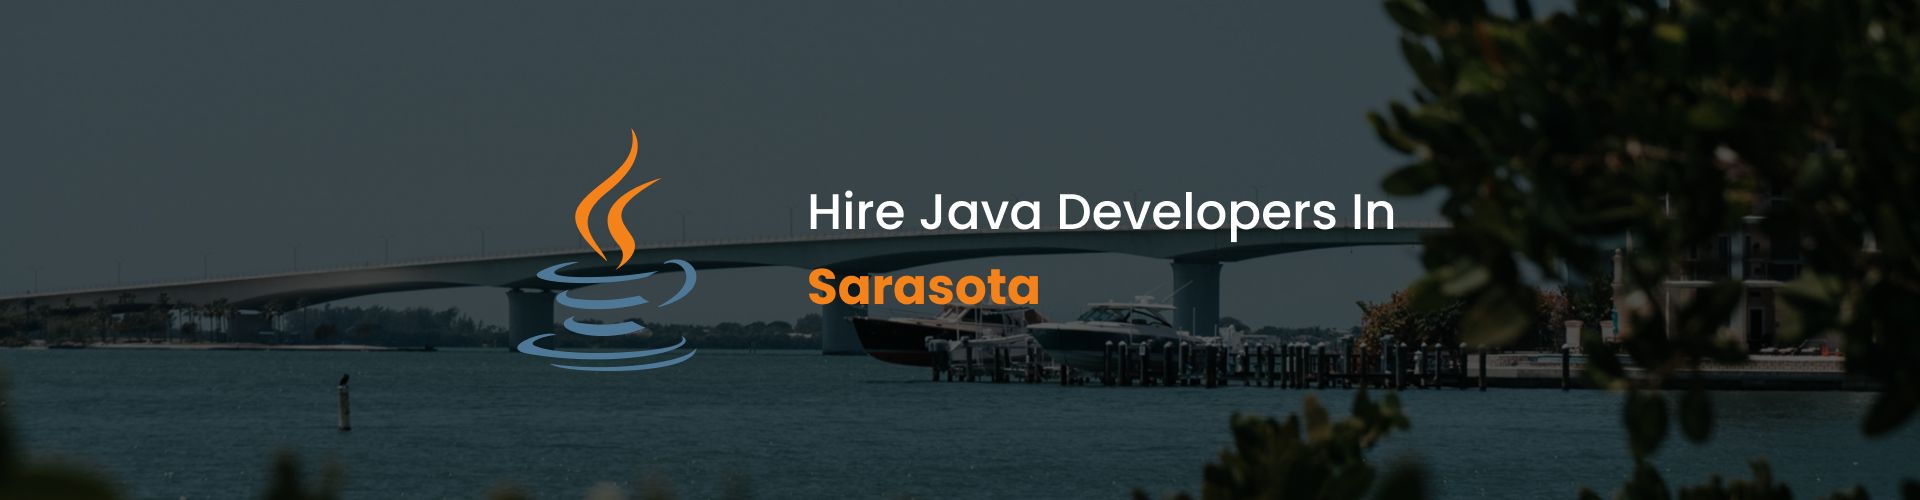 hire java developers in sarasota